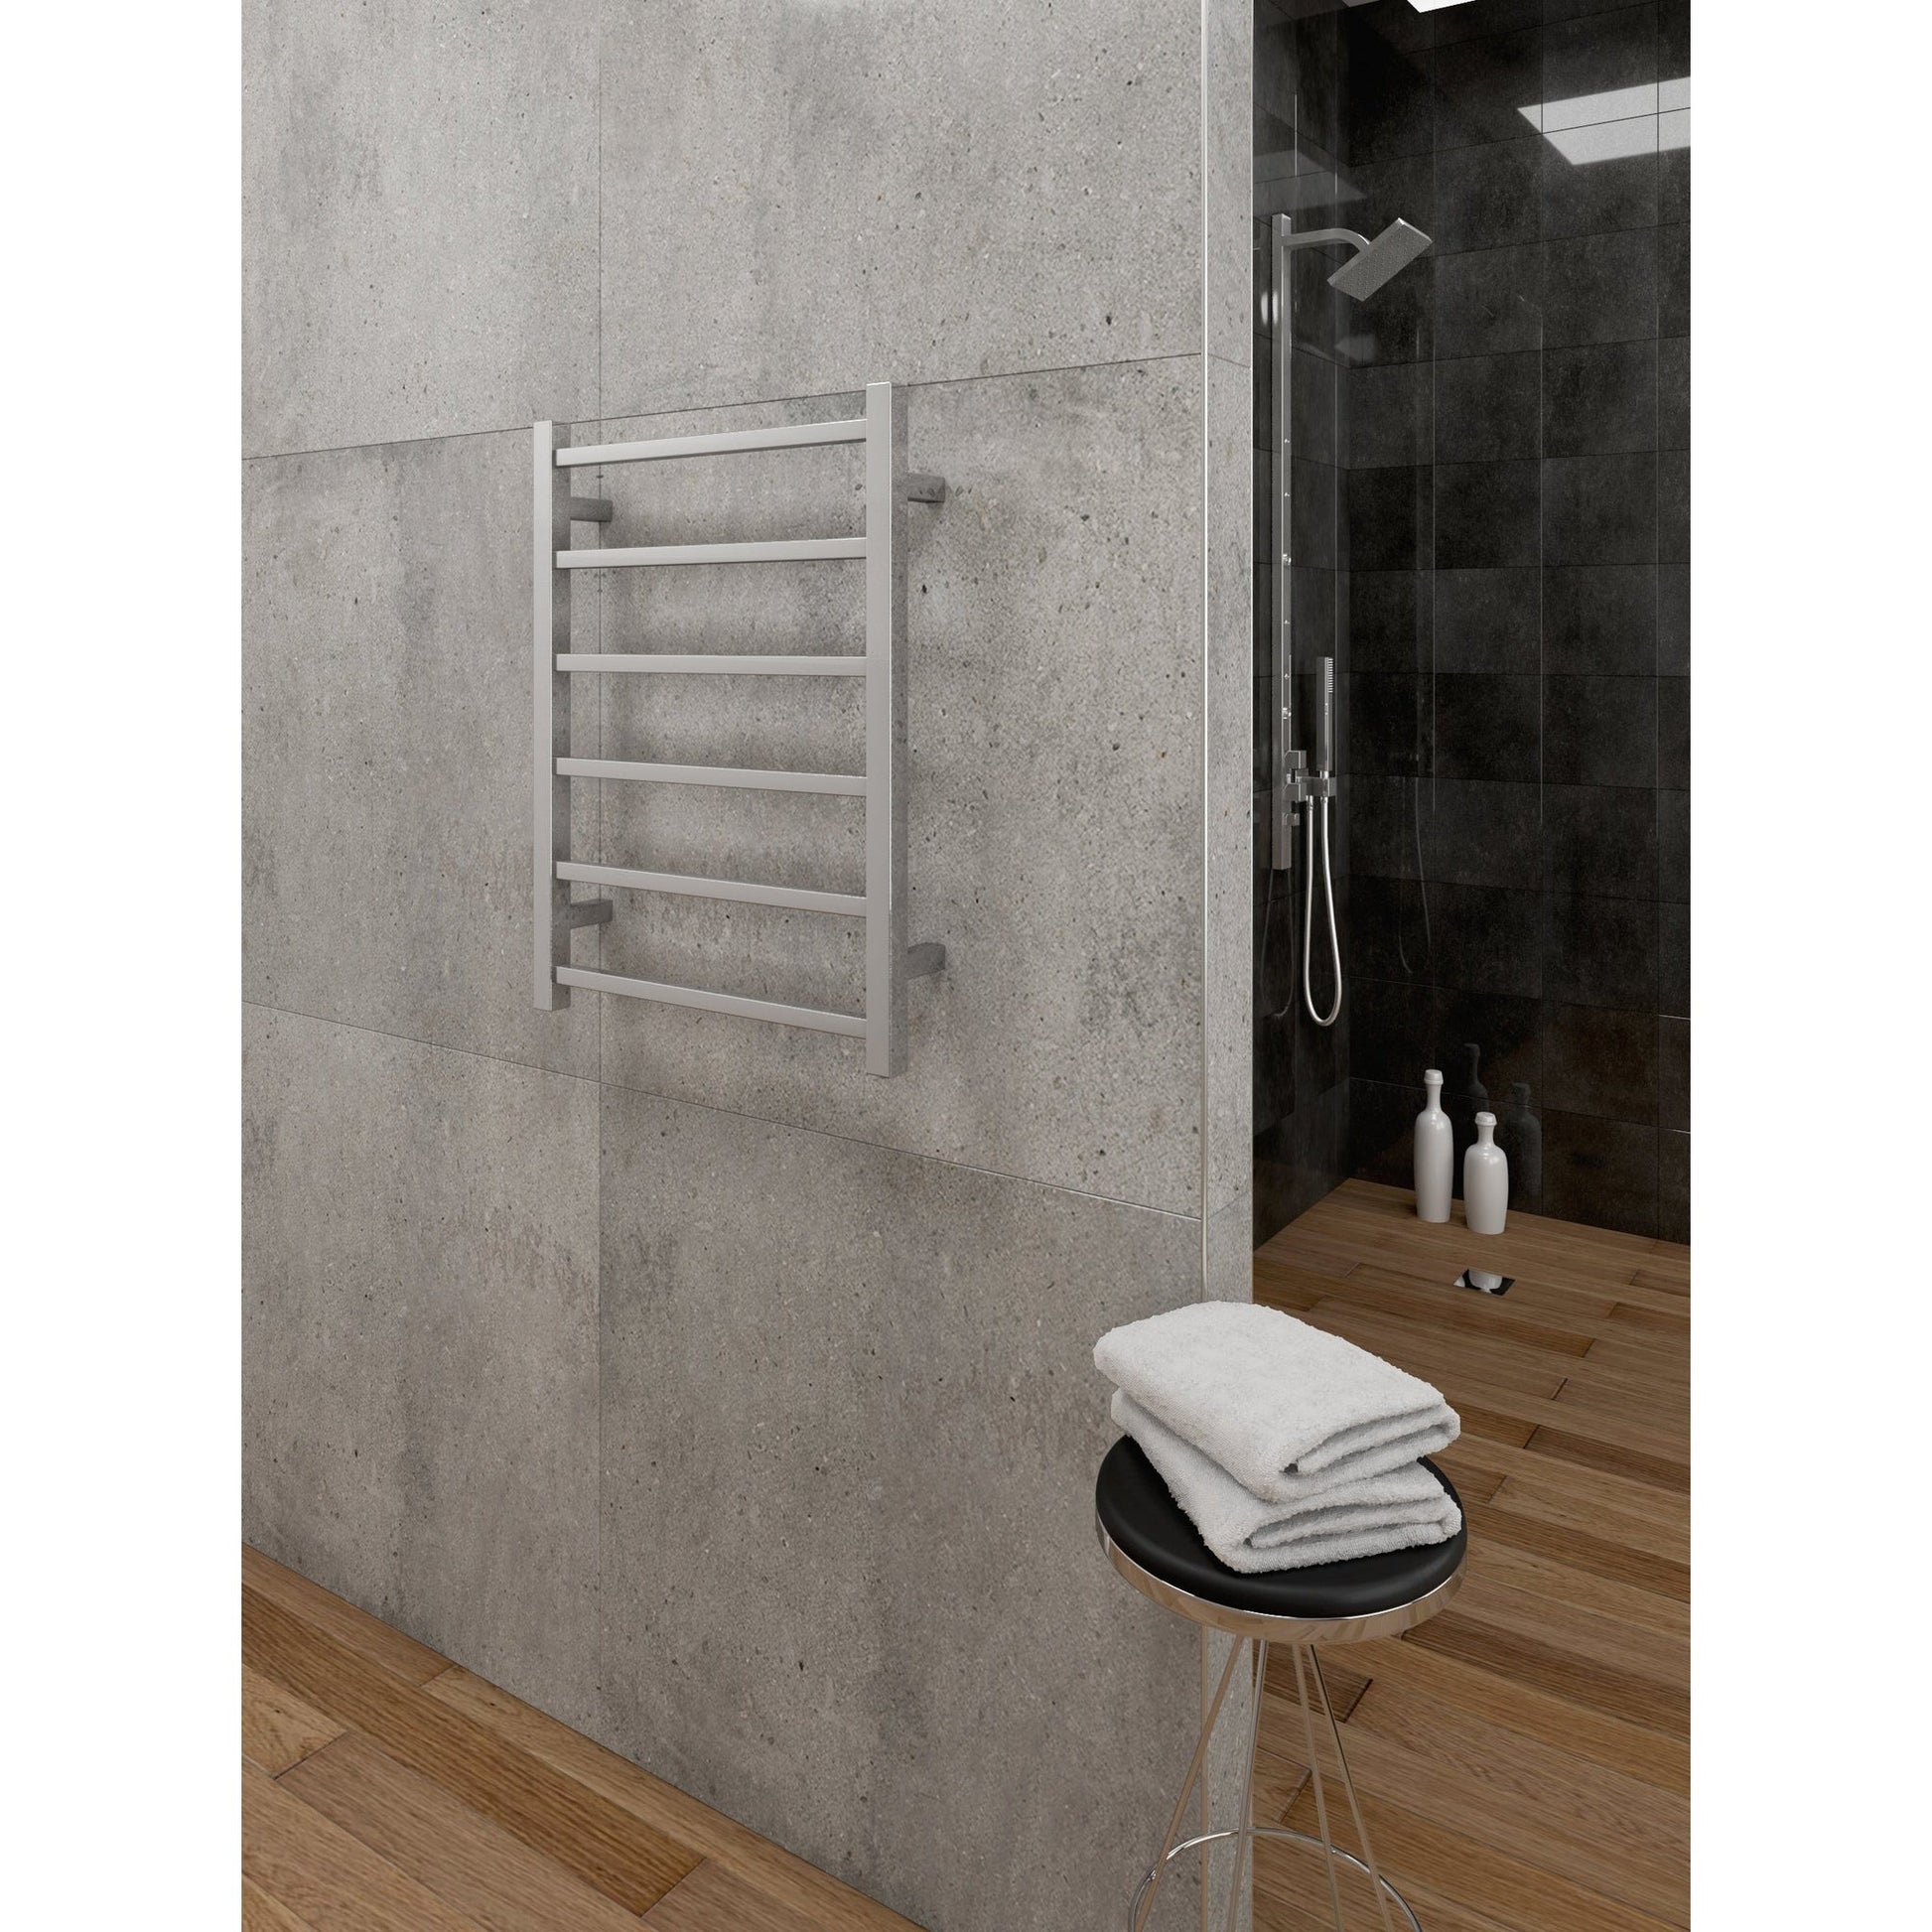 Cozy in Paris Axis 22" x 28" 68 W 200 BTU Nickel Electric Heating Wall-Mounted Towel Warmer